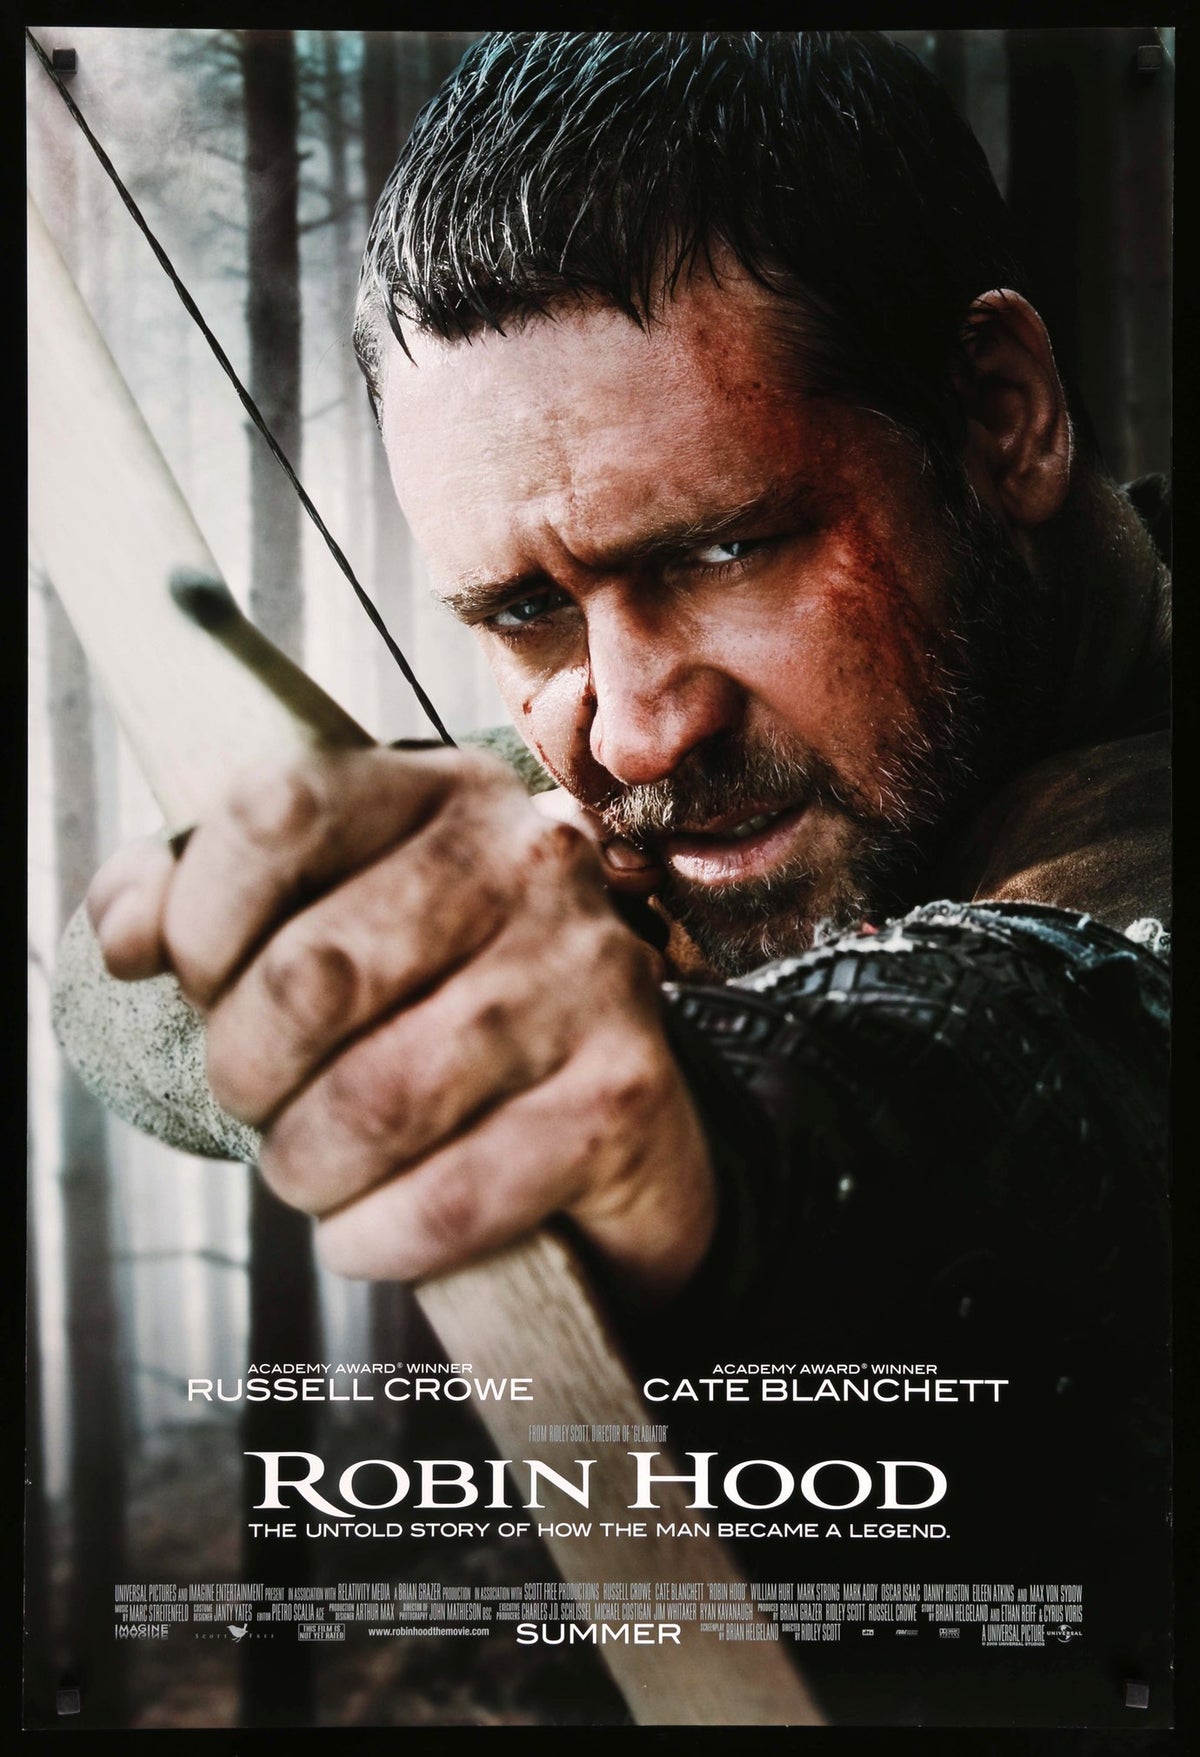 Robin Hood (2010) original movie poster for sale at Original Film Art